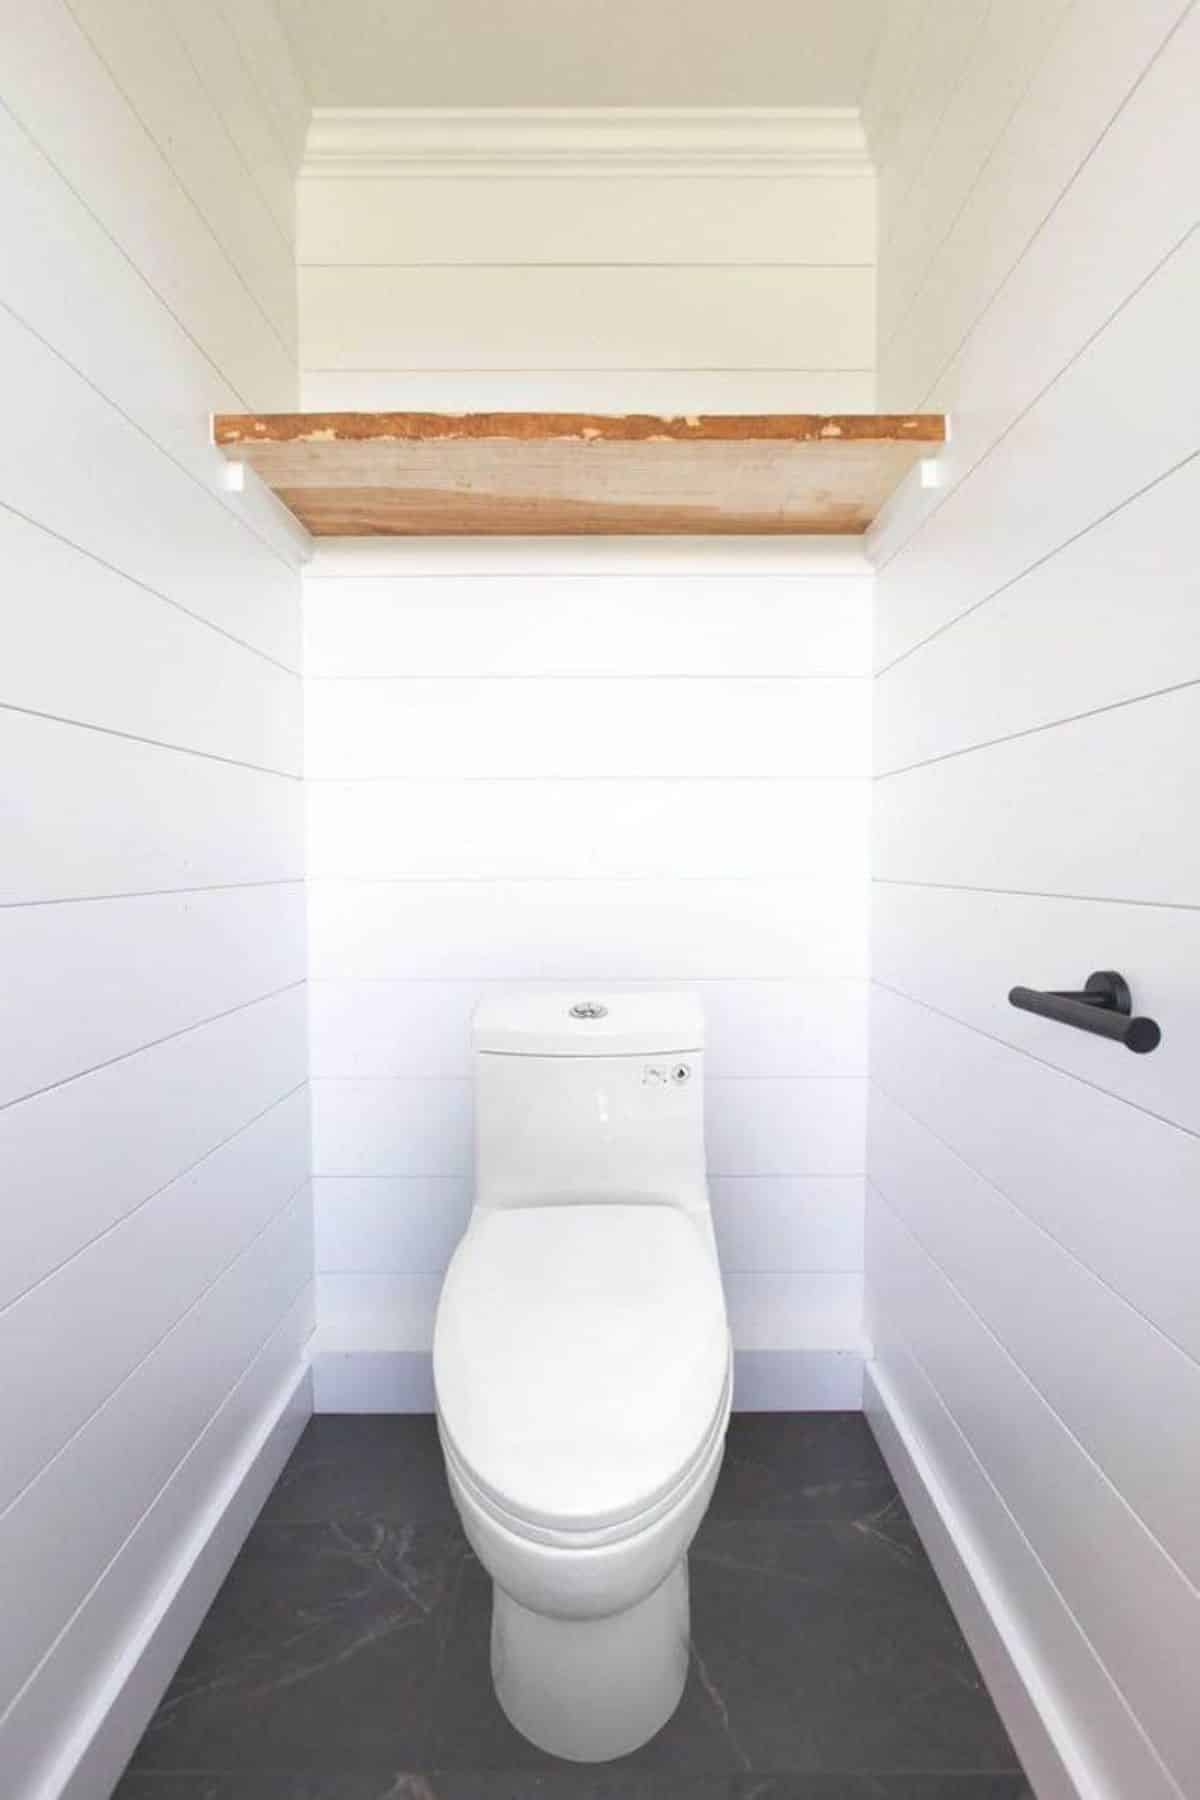 Standard toilet in bathroom of one bedroom tiny home